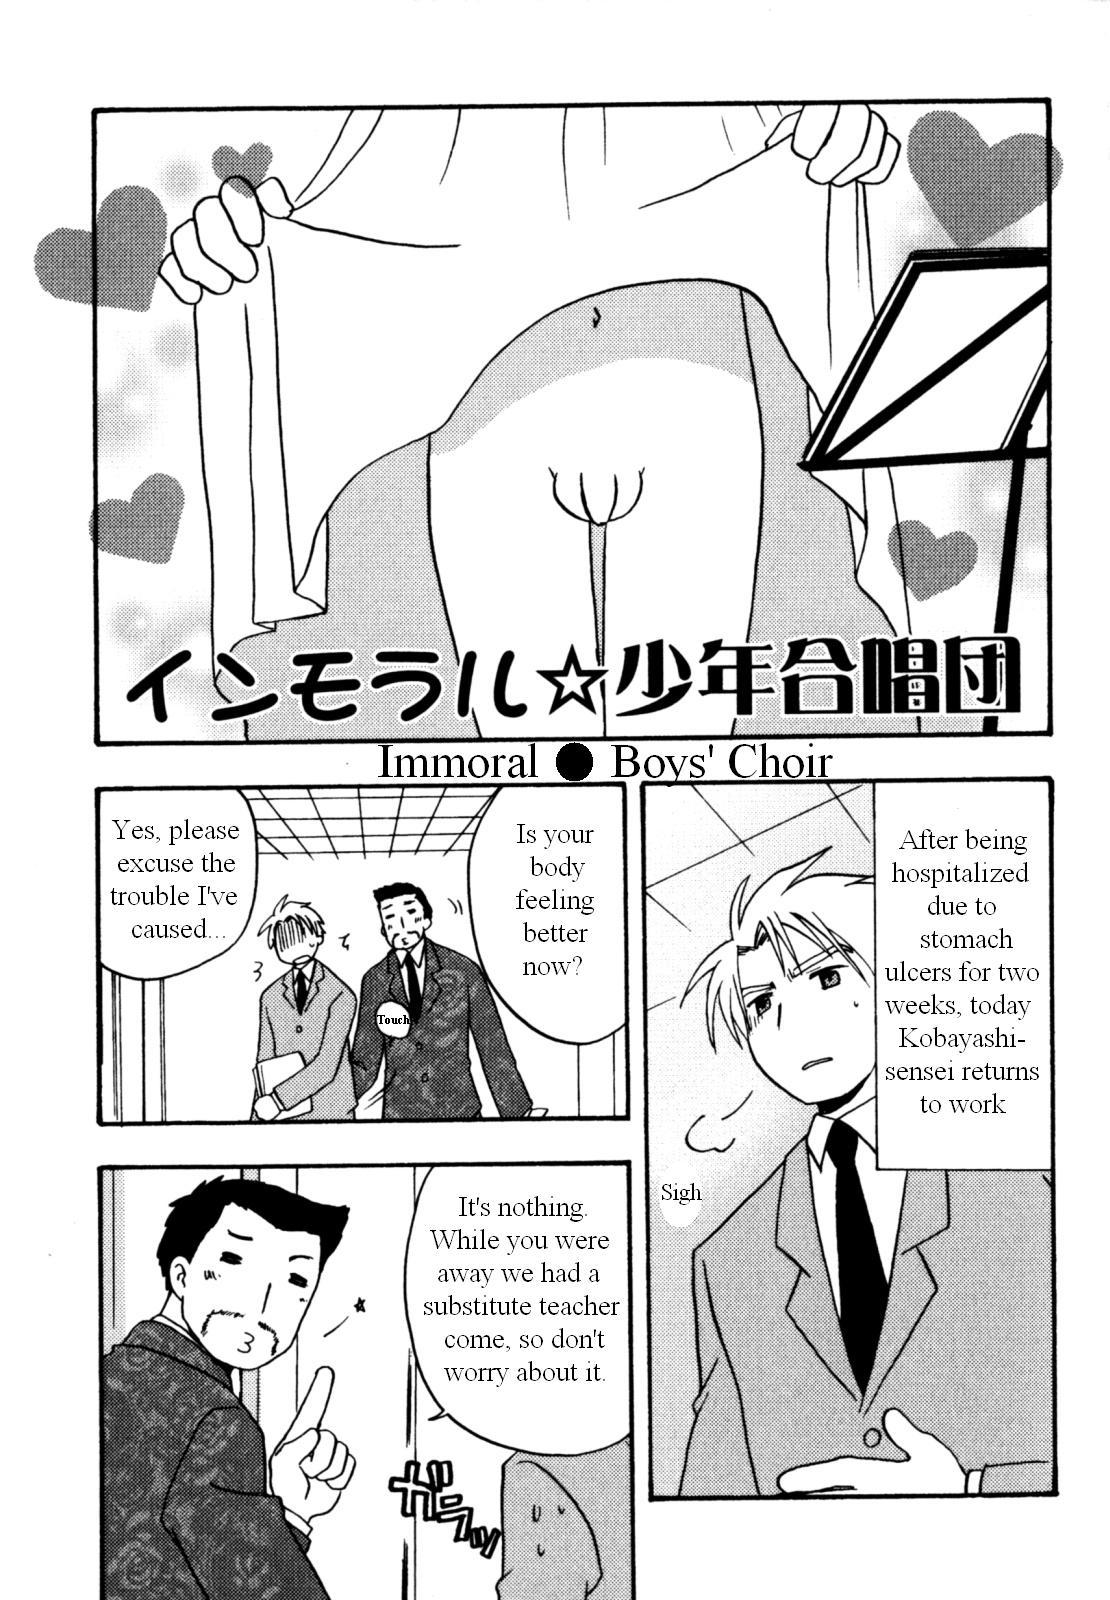 Immoral Boys by Kirigakure Takaya 56